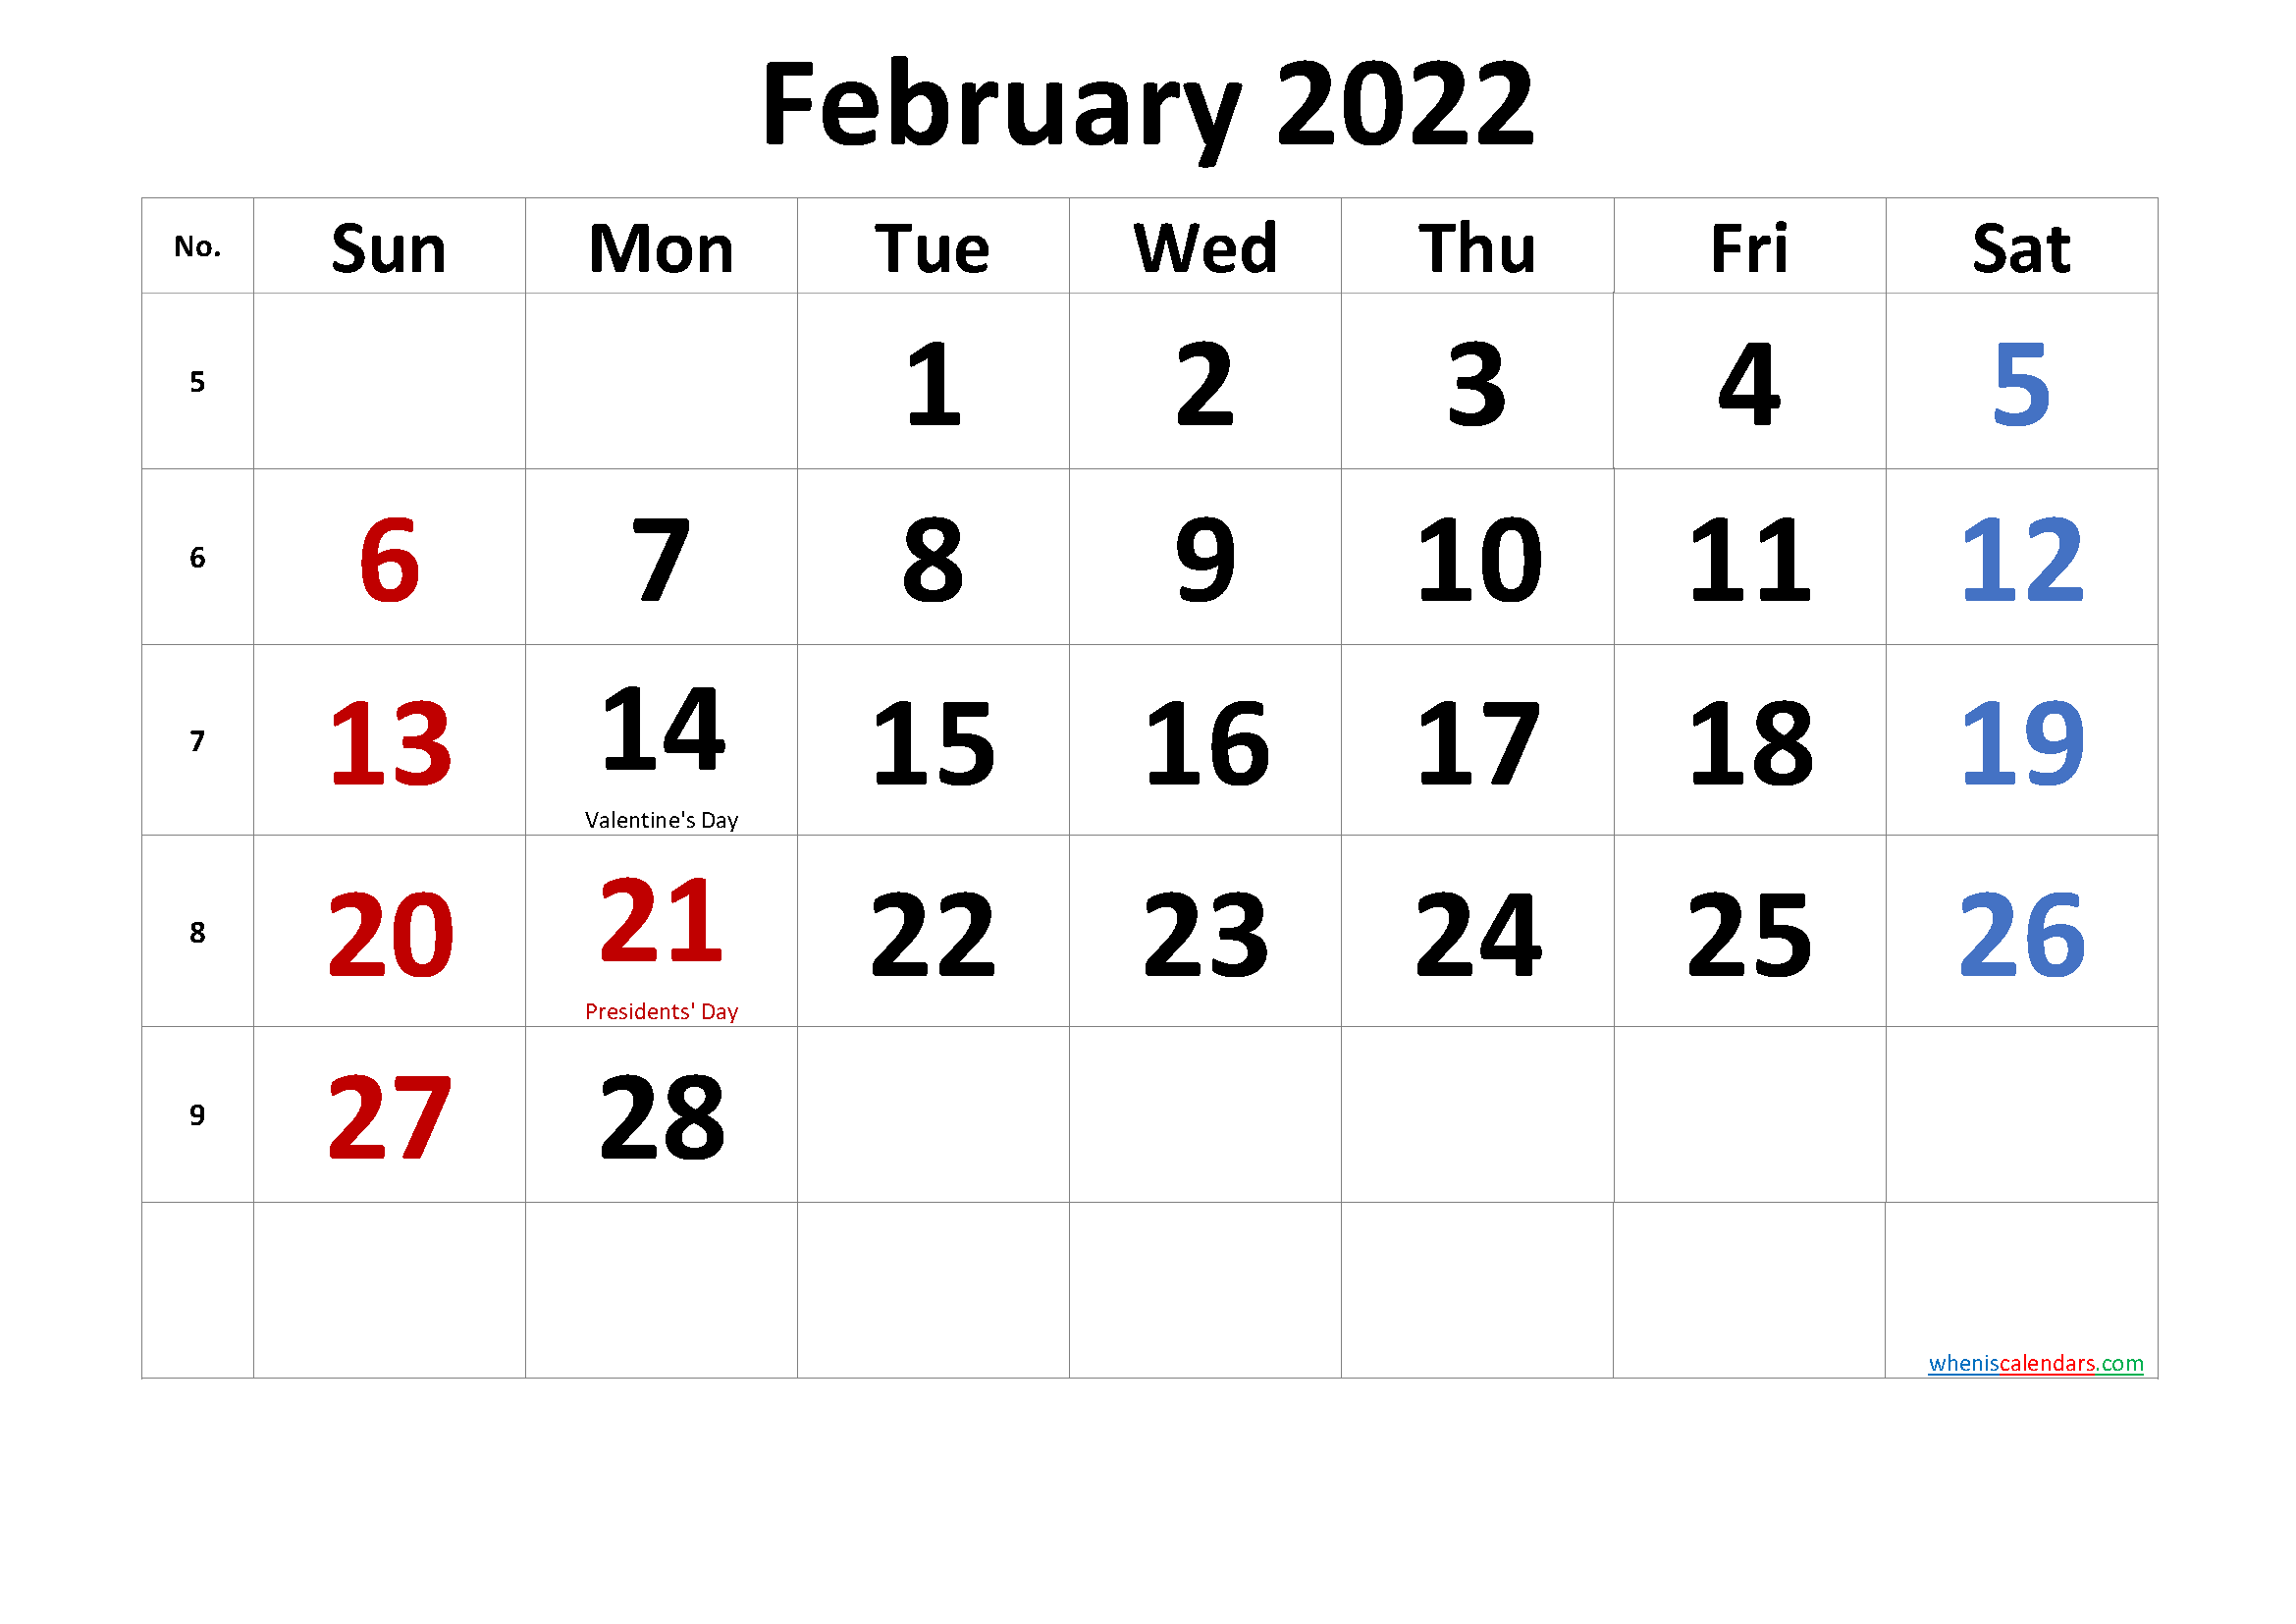 Праздники февраль 2022. Февраль 2022. February 2022. Календарь февраль. Календарная сетка февраль 2022.